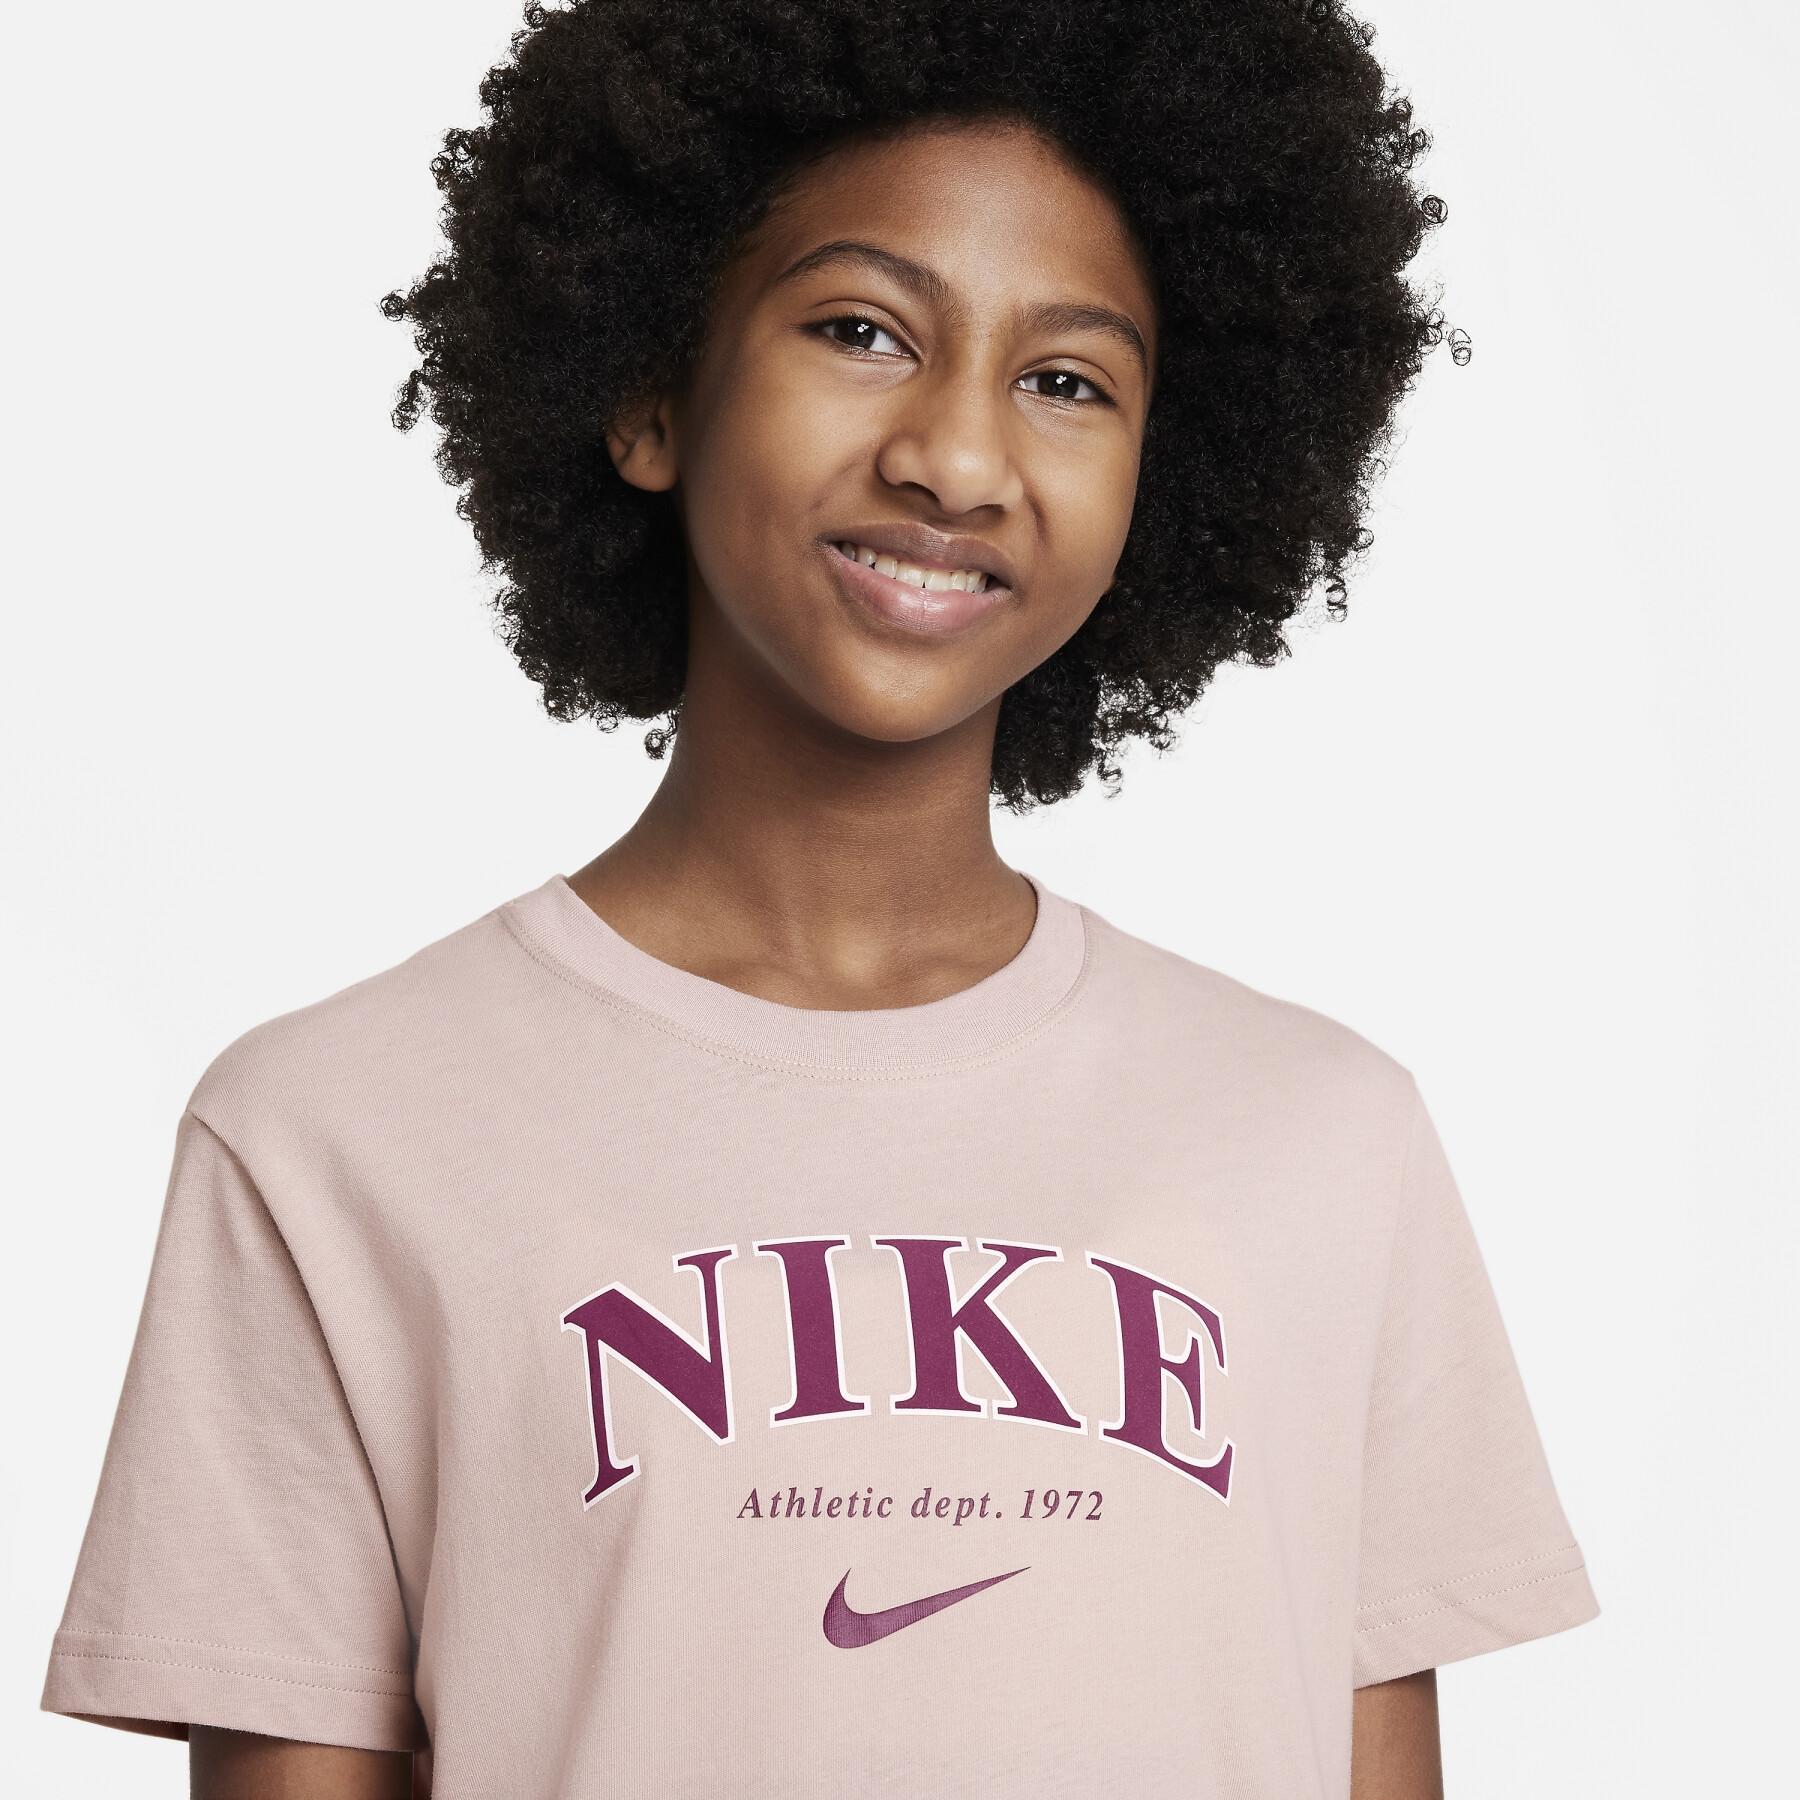 Girl's T-shirt Nike Trend BF Print